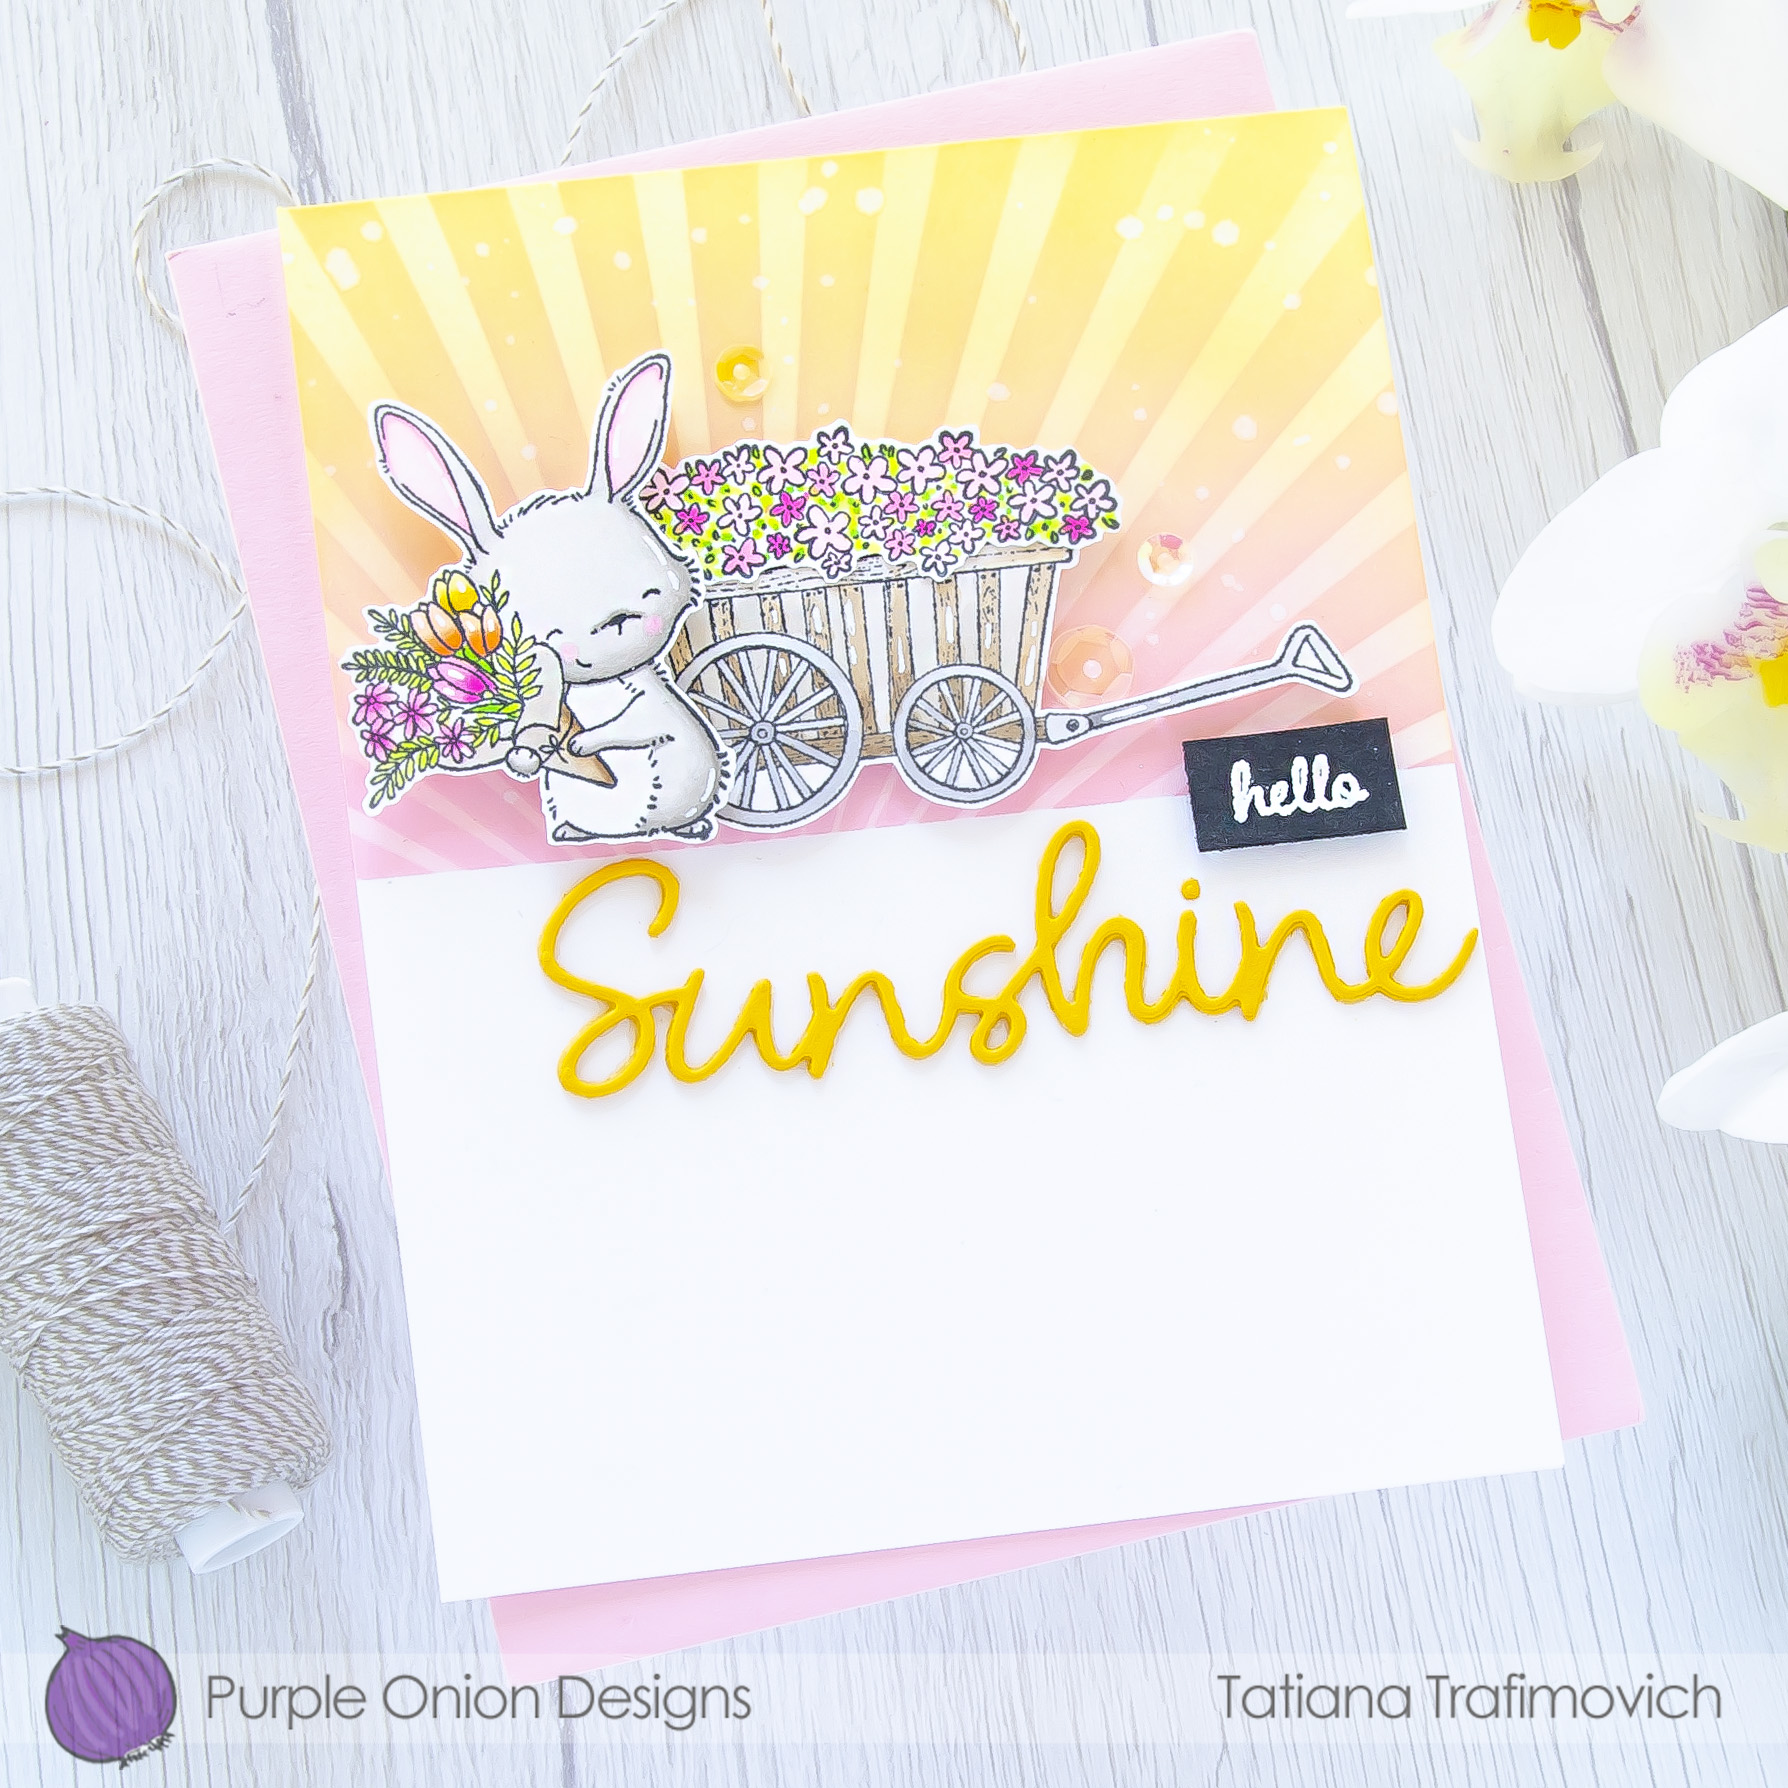 Hello Sunshine #handmade card by Tatiana Trafimovich #tatianacraftandart - stamps by Purple Onion Designs